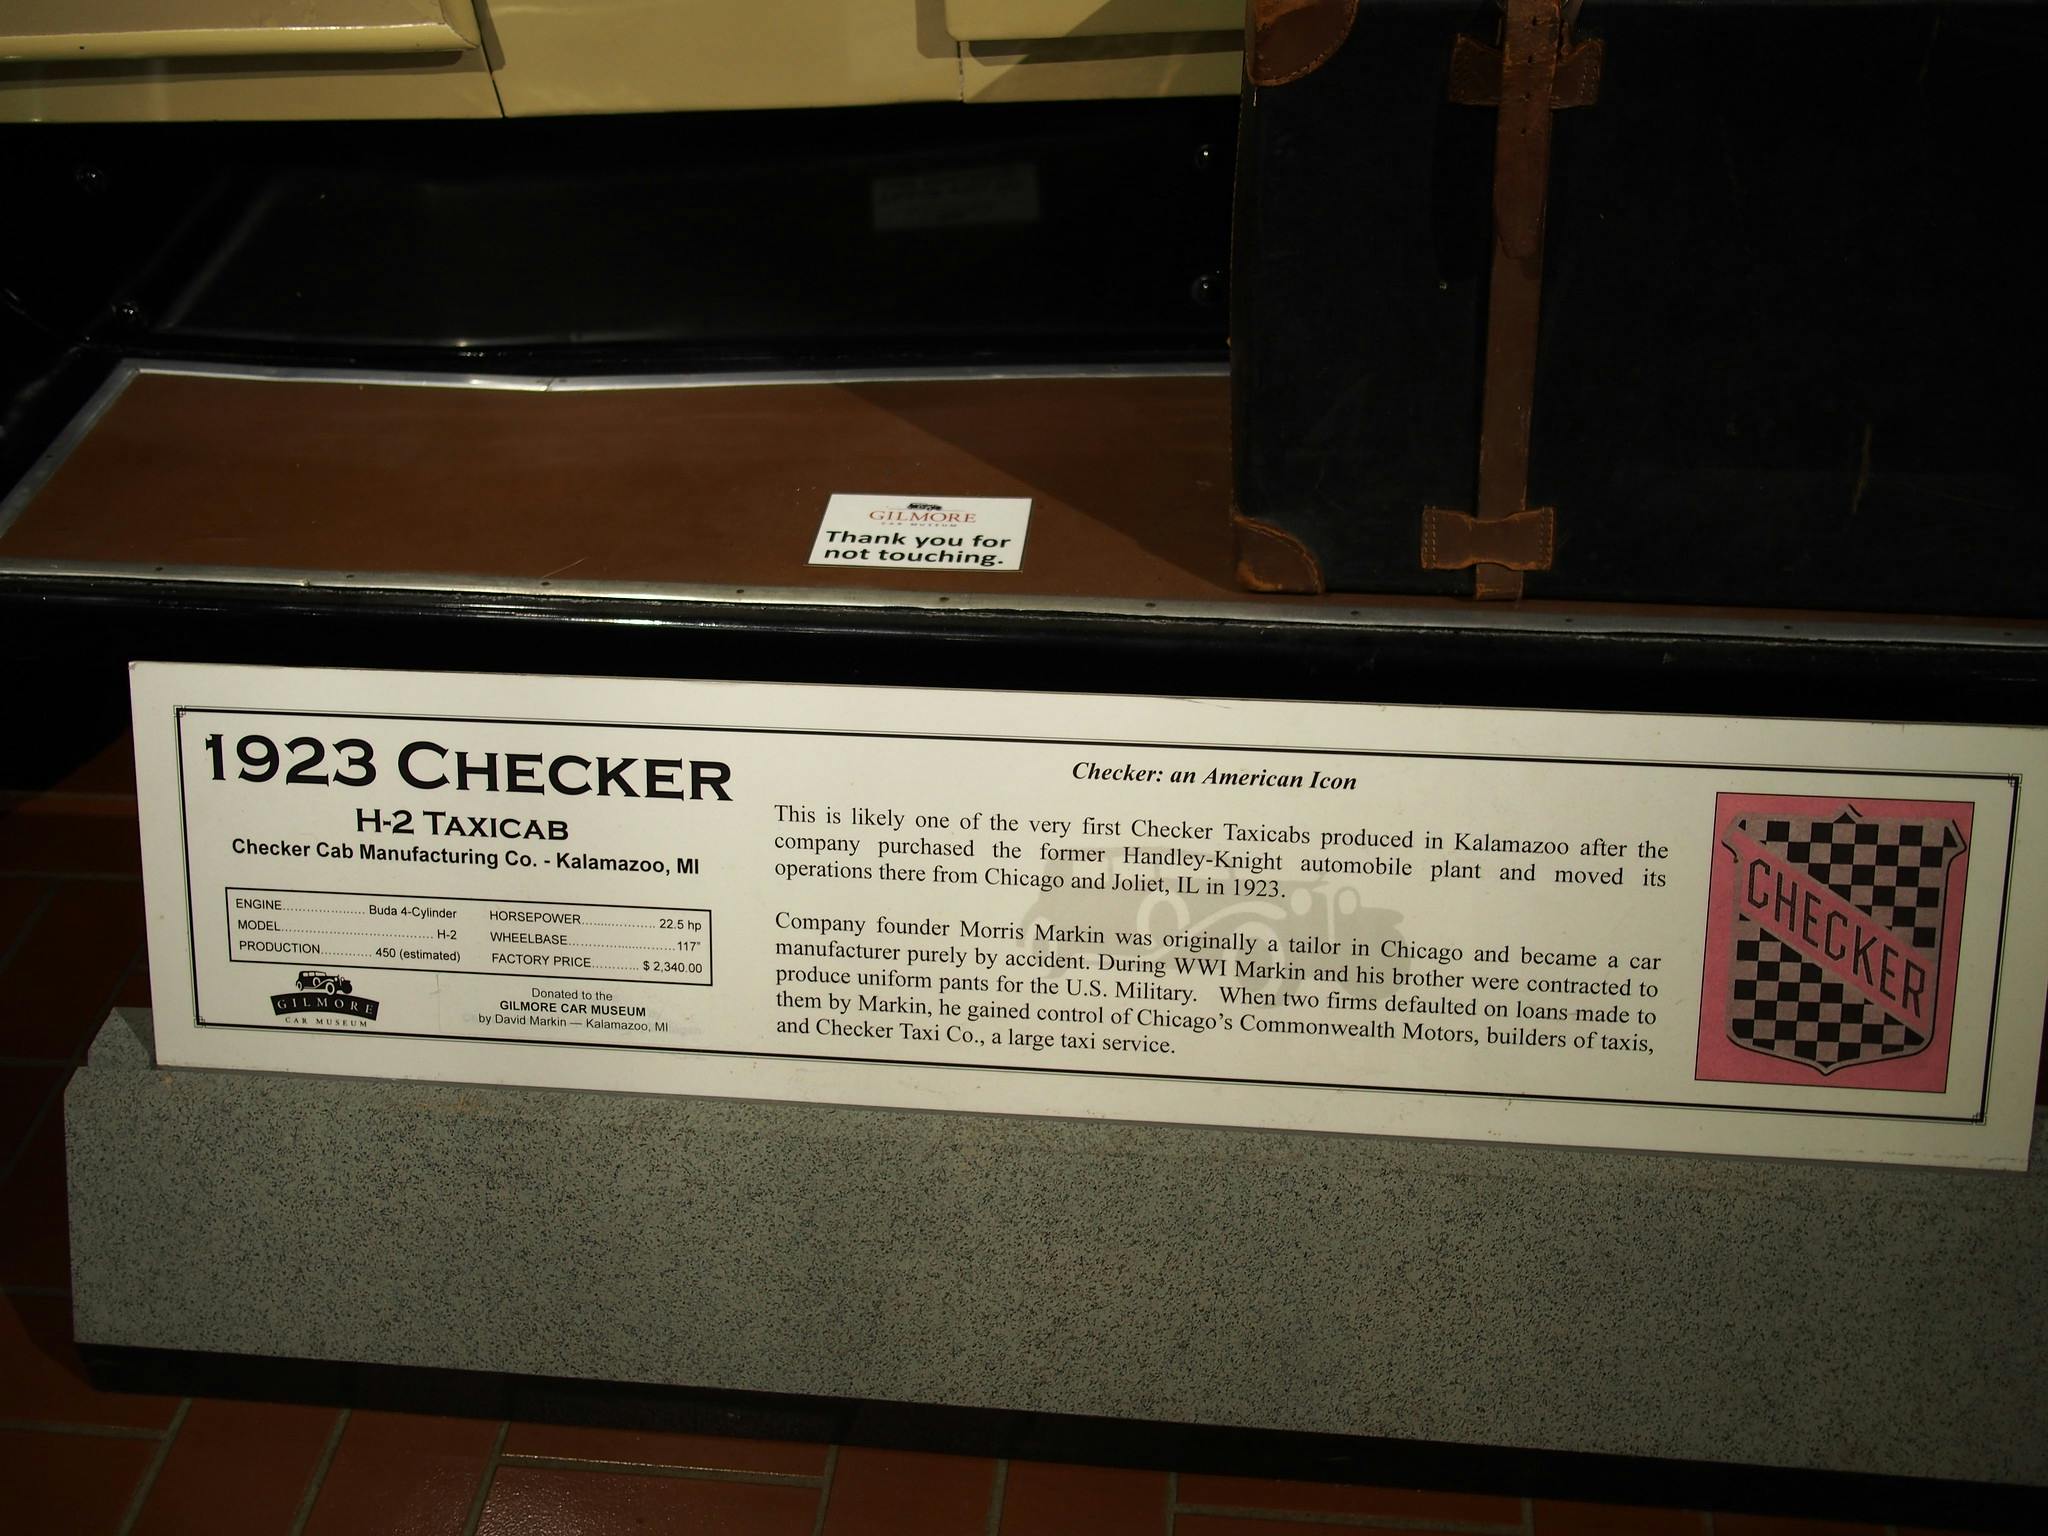 1923 Checker Cab info plate